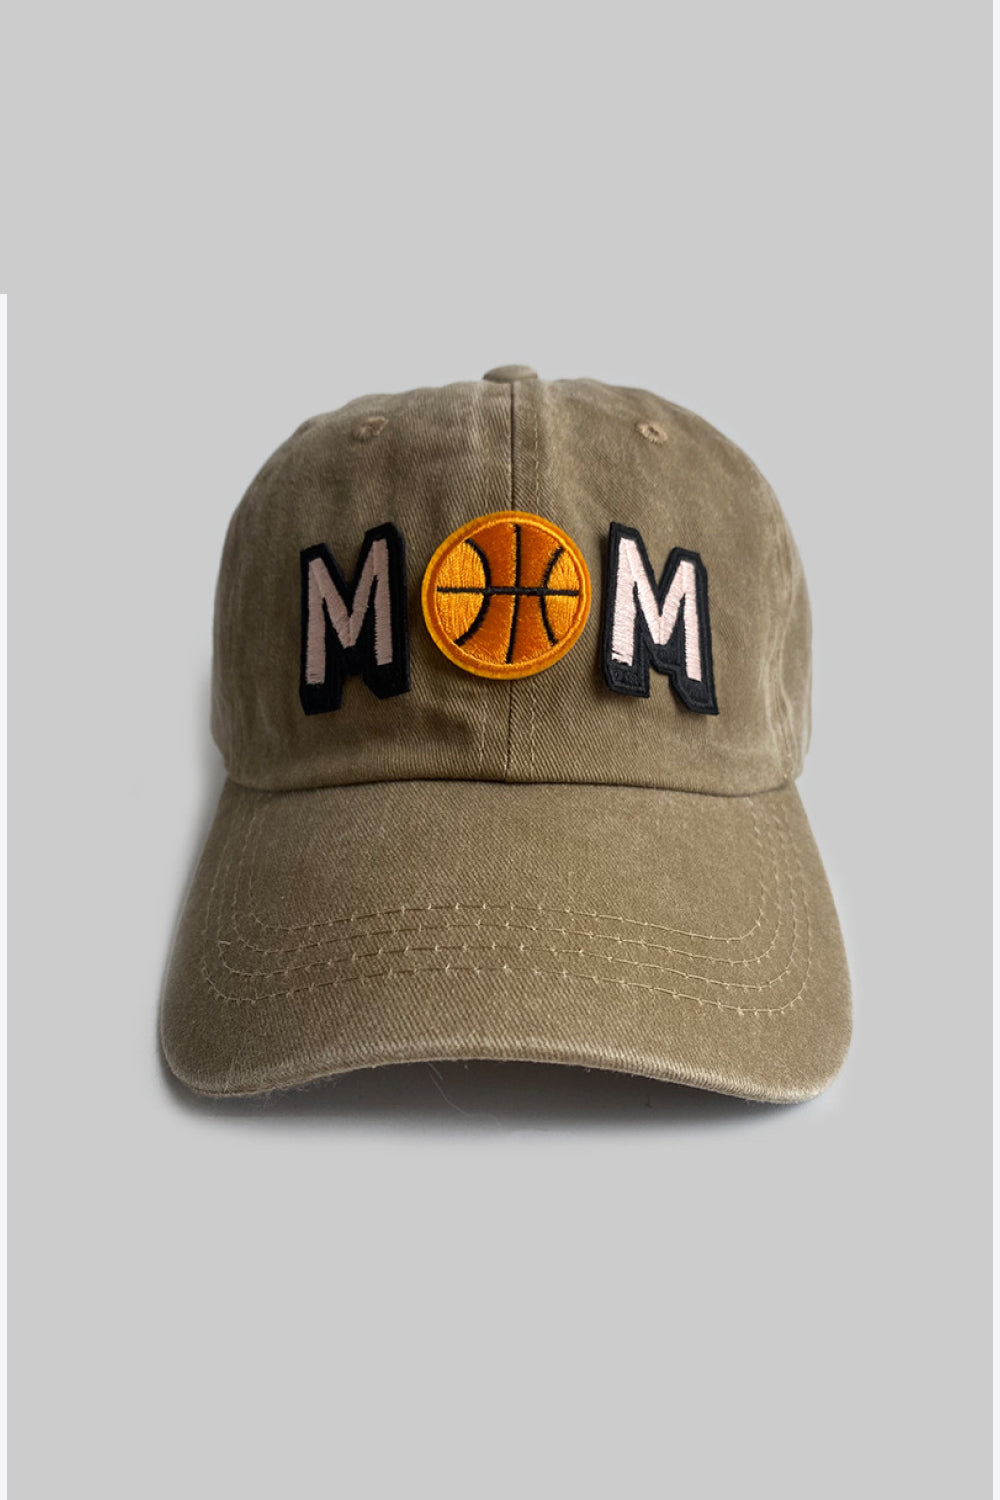 5 Colors - Basketball MOM Cap - One Size - Adjustable Ti Amo I love you